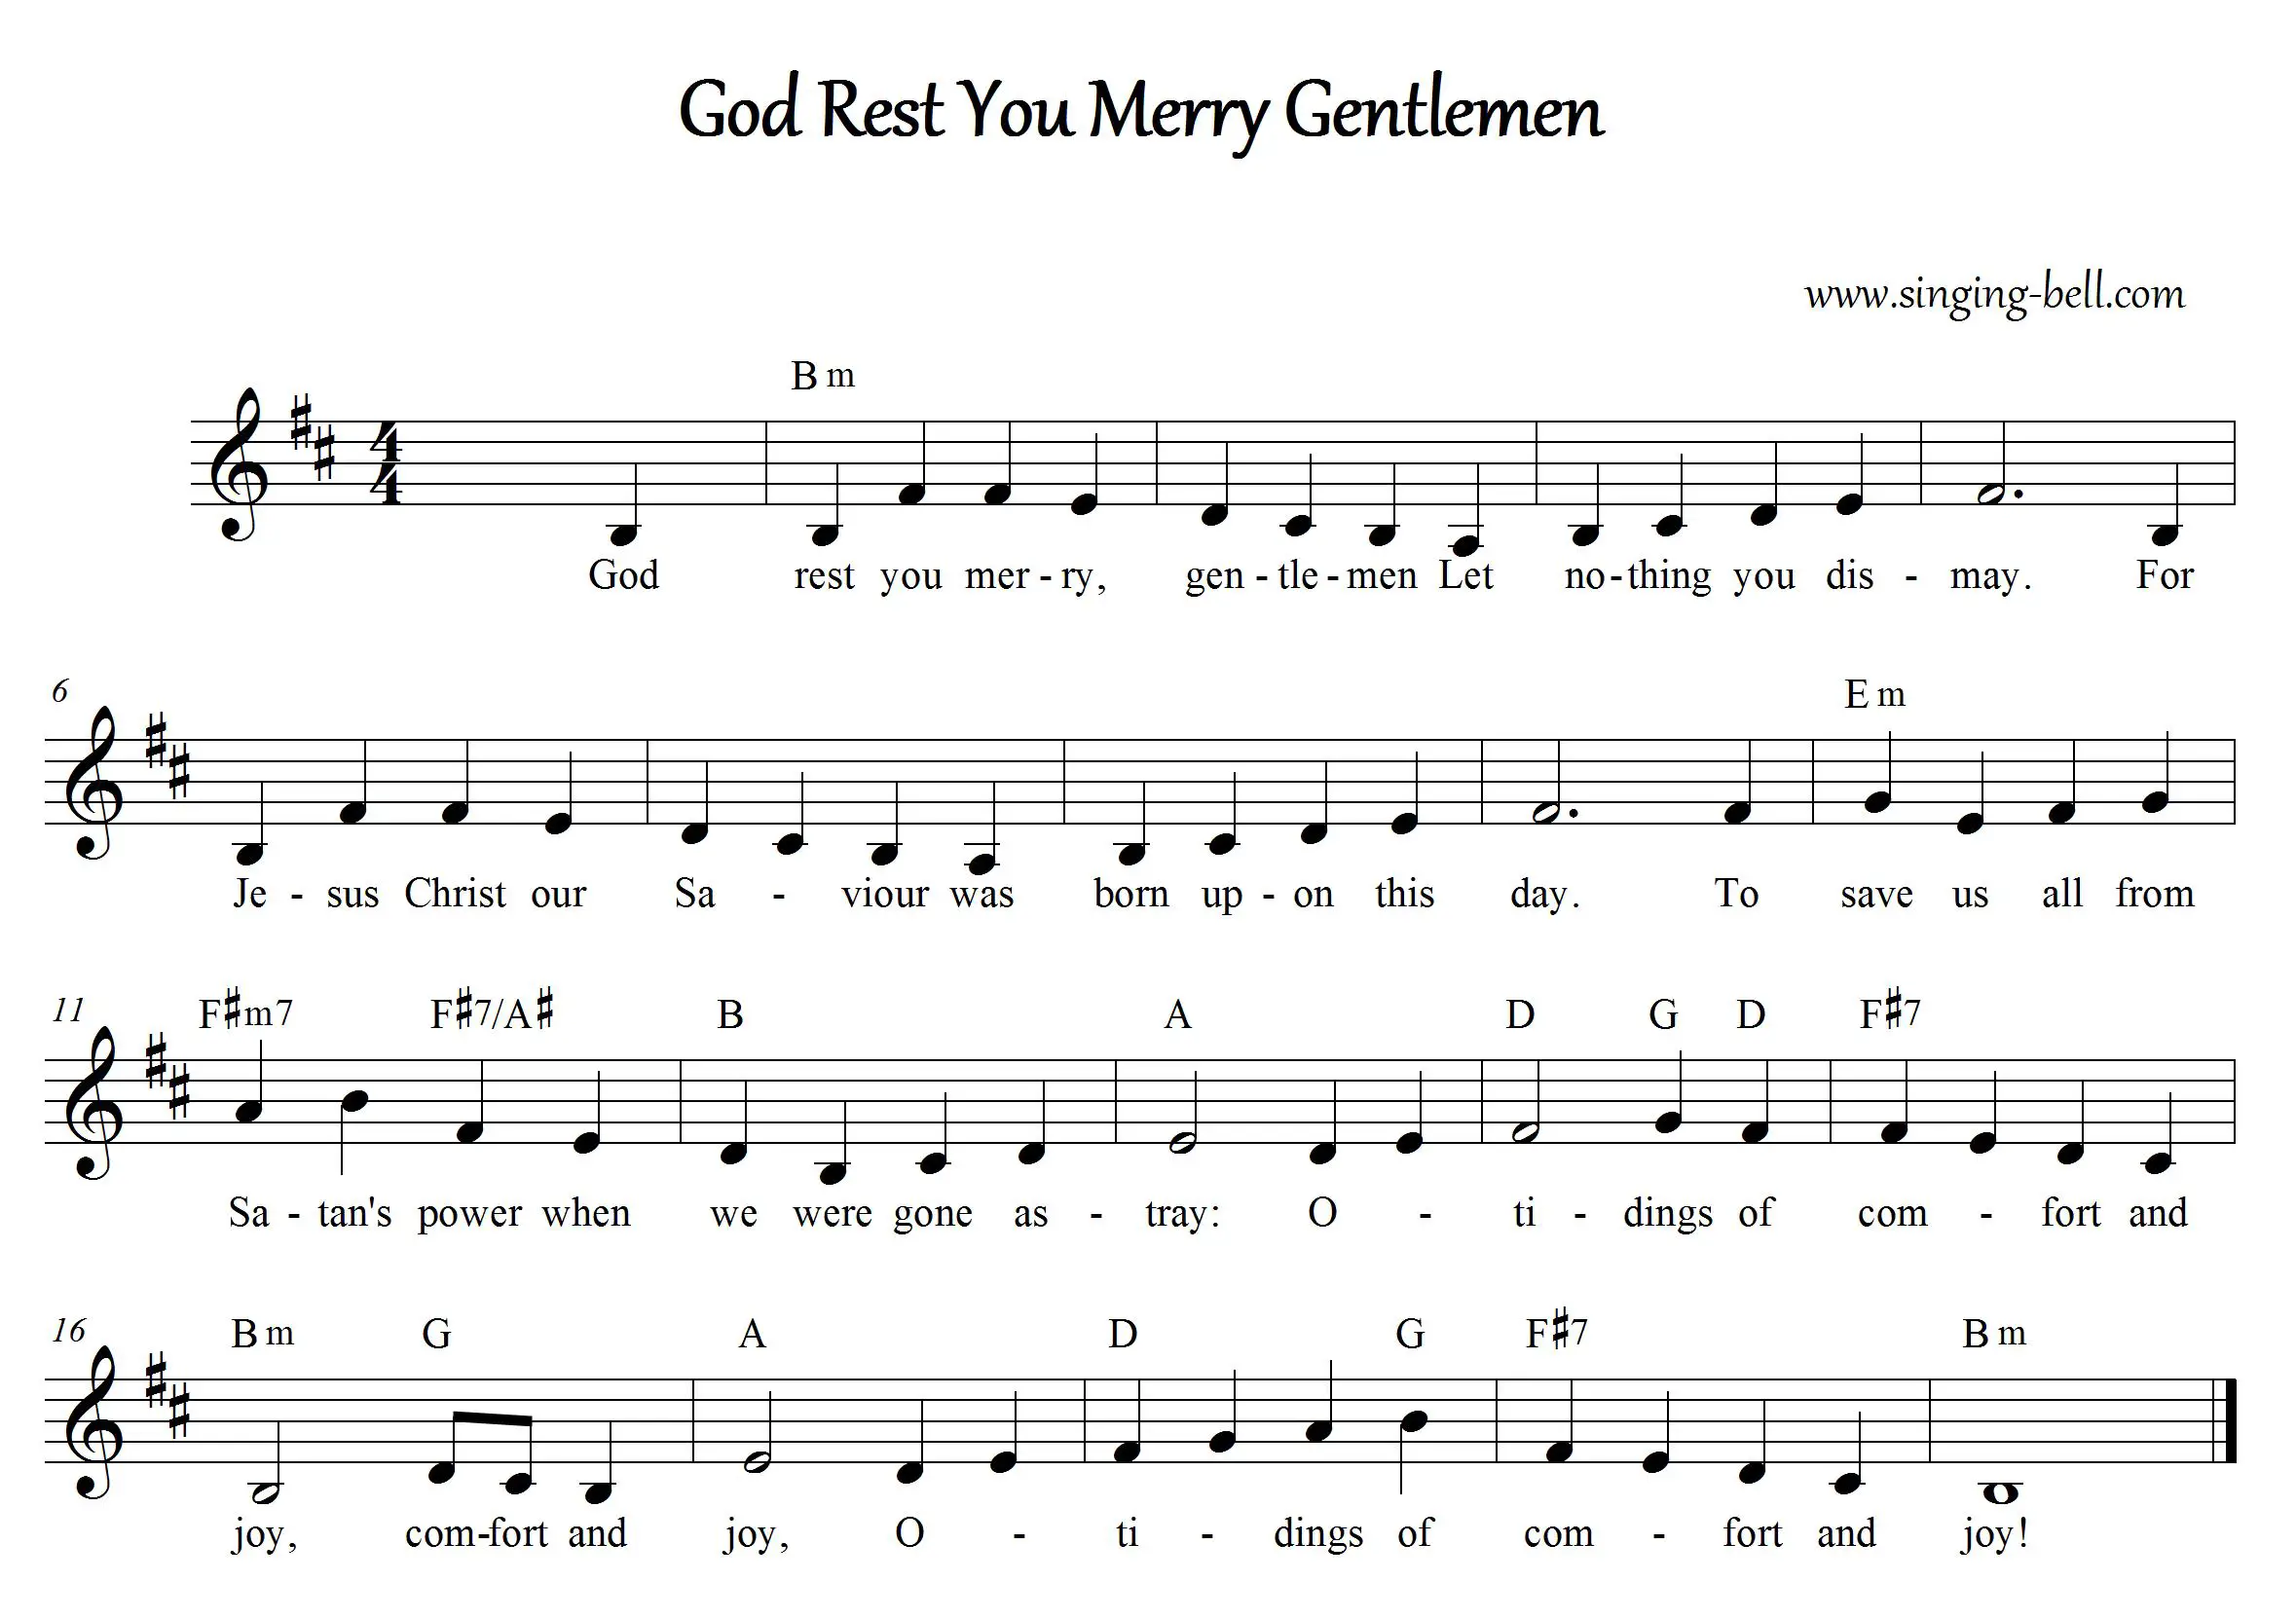 God Rest You Merry Gentlemen sheet music in Bm